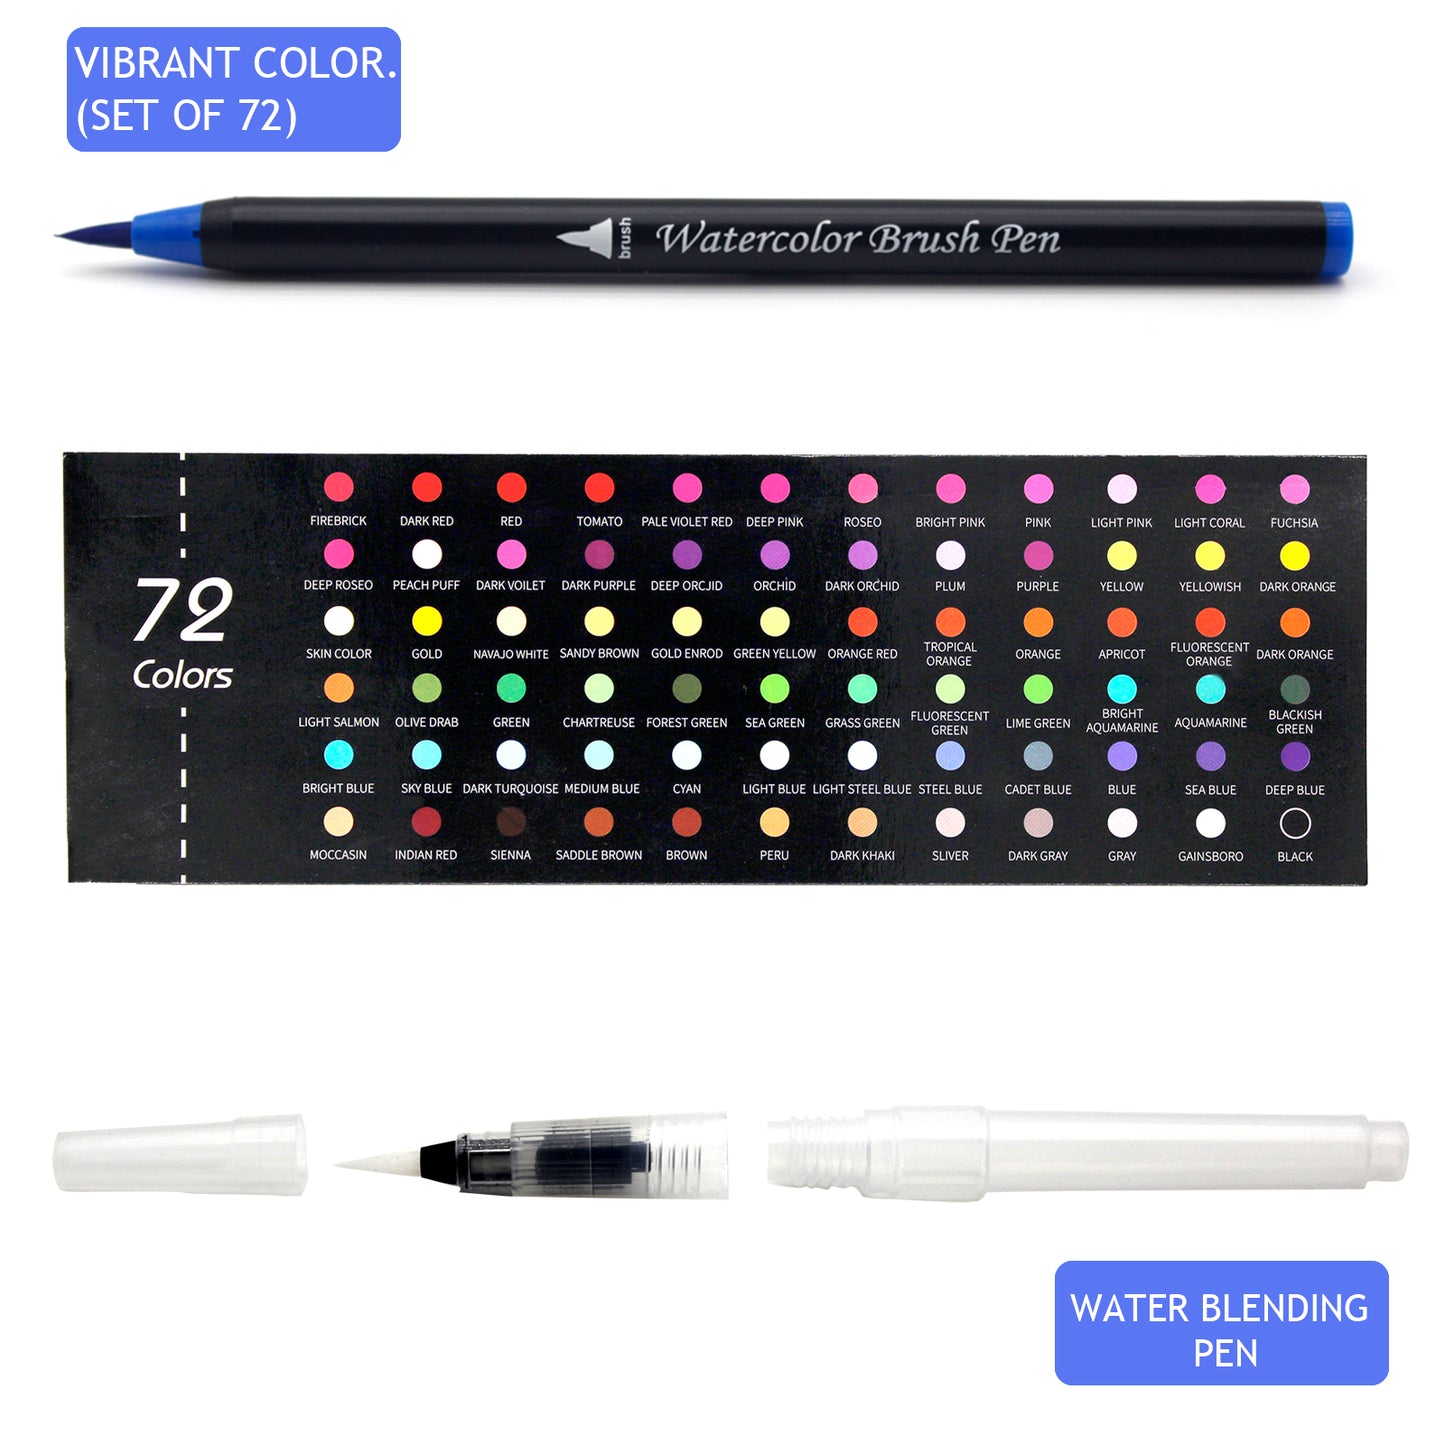 Felt Brush Pens, Basic Colors - Set of 24